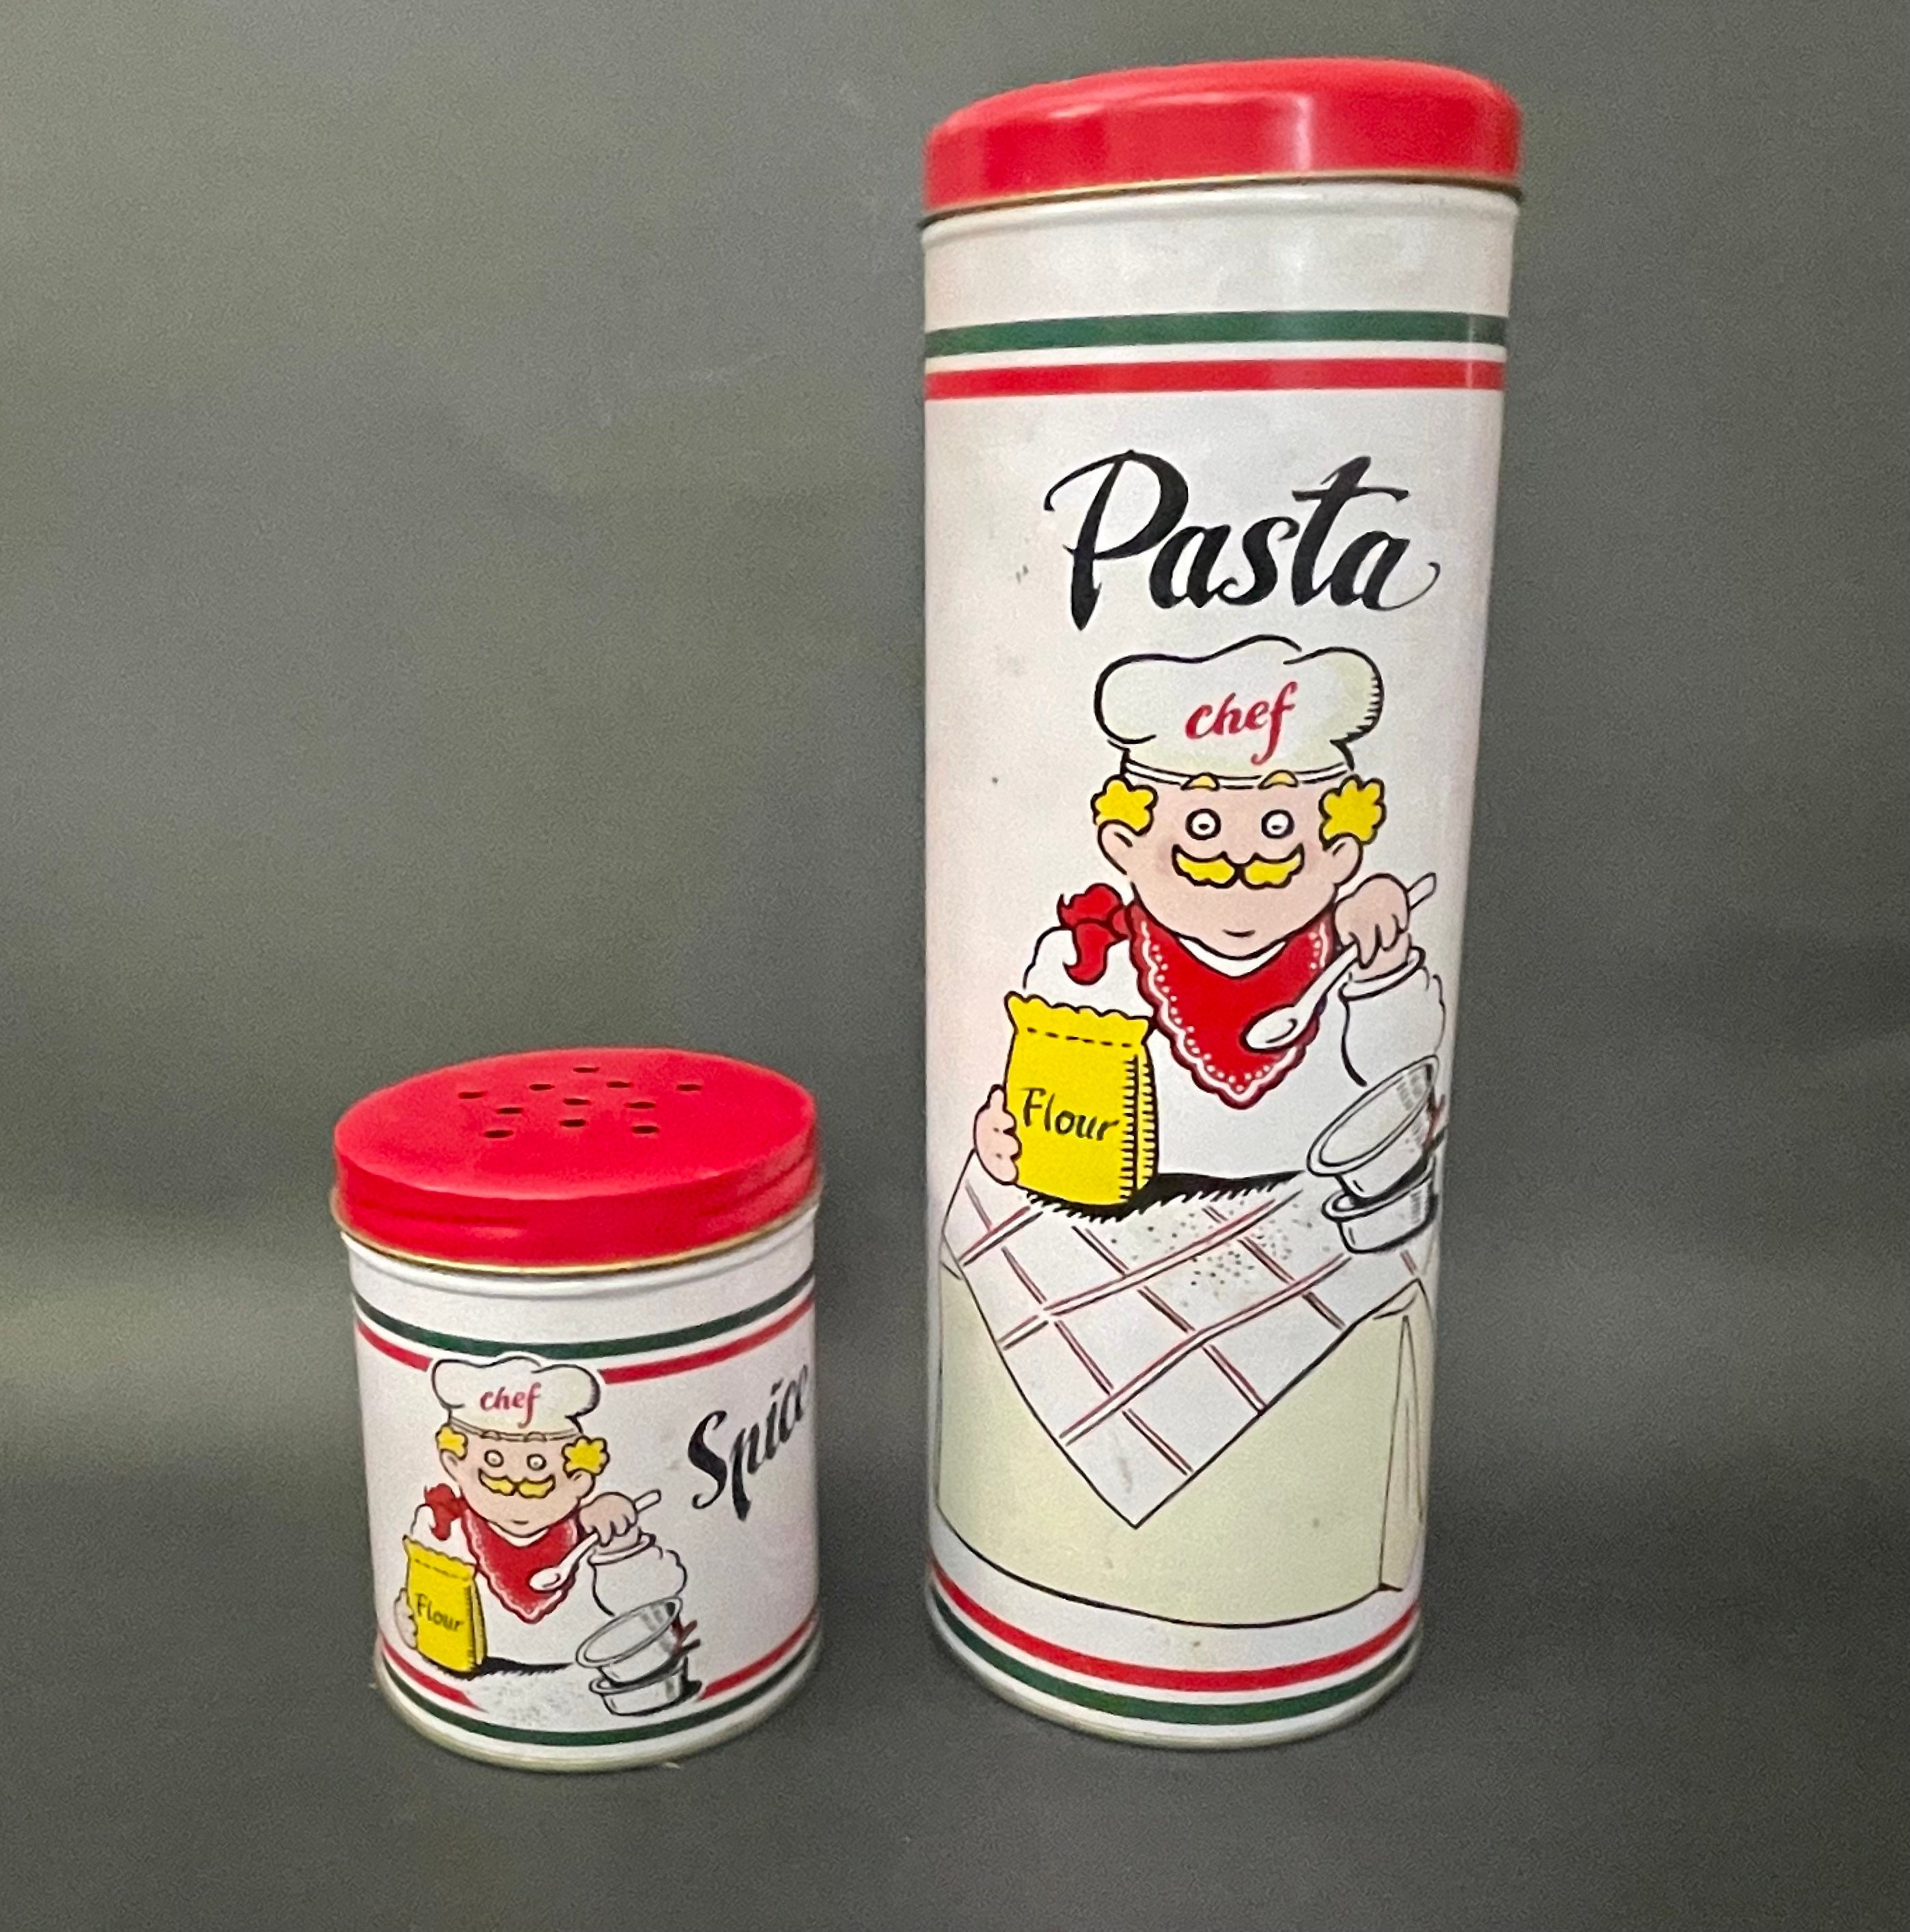 Vintage Ravioli Wit, Brevettato, Raviol Wit, Pasta and Ravioli, Tortellini  Maker With Original Box , Made in Italy 1970's -  Finland